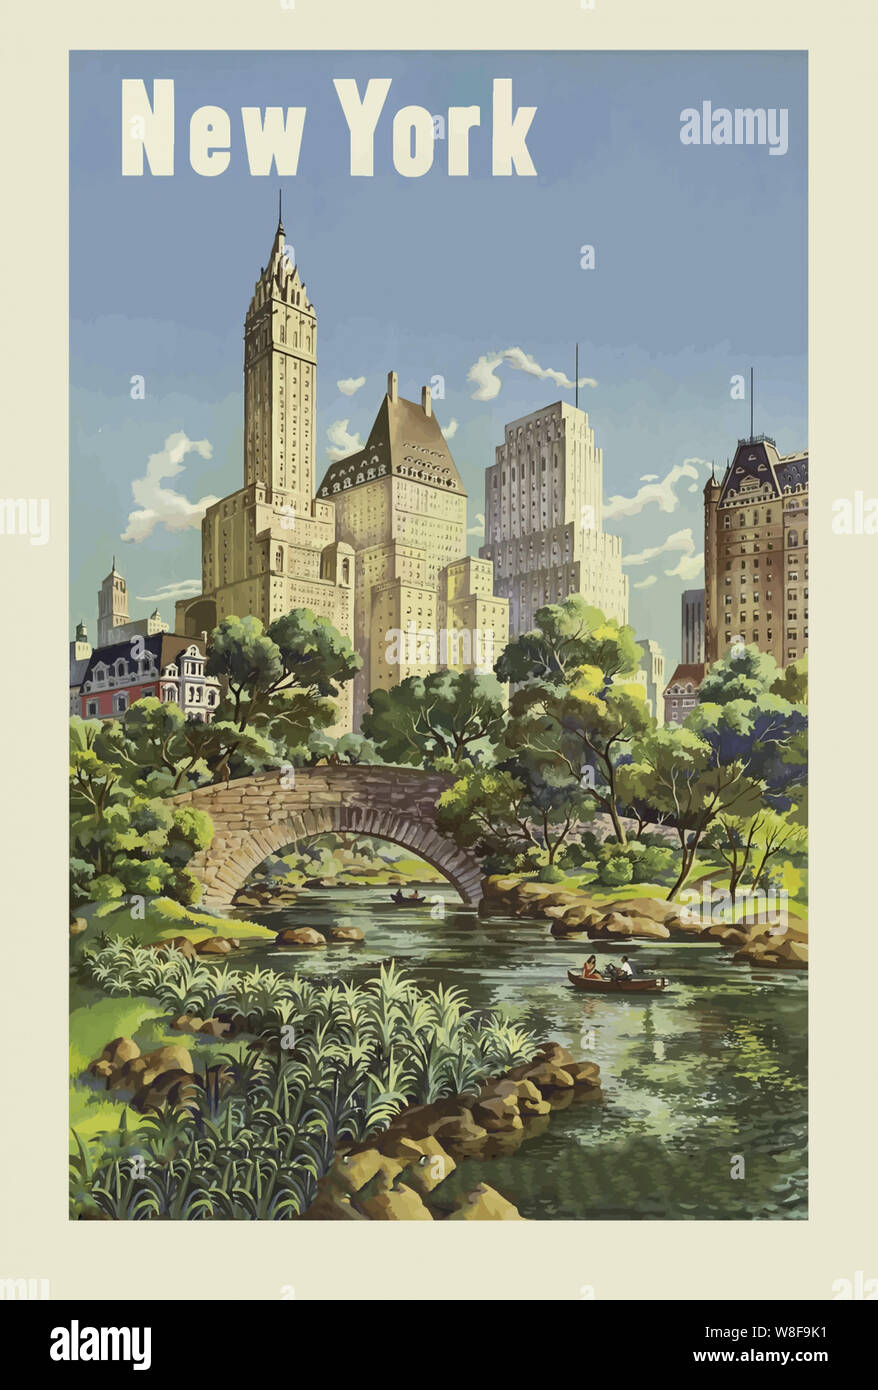 Vintage New York poster Stock Photo - Alamy